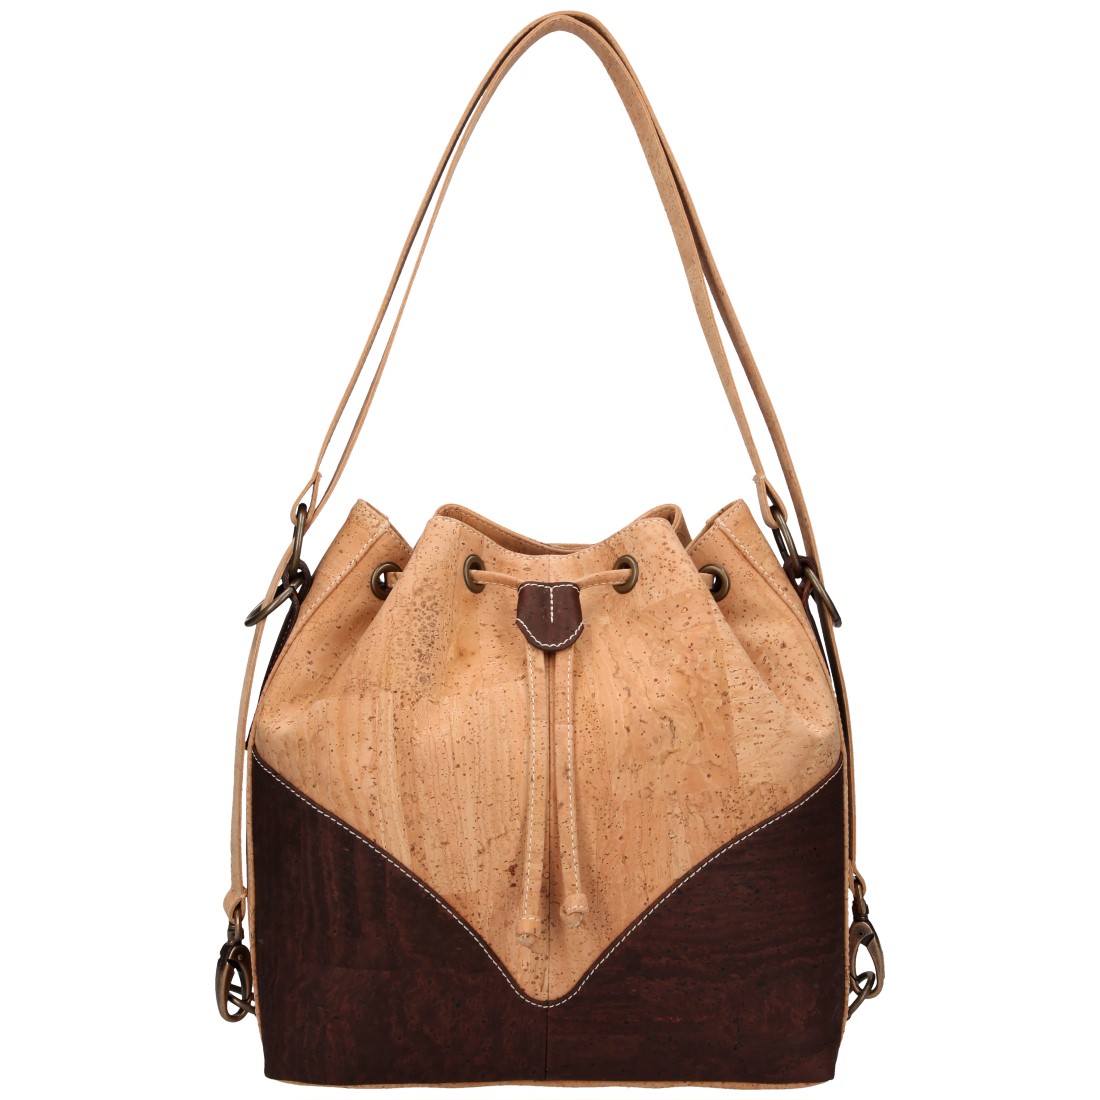 Cork handbag MAF00259 - BROWN - ModaServerPro